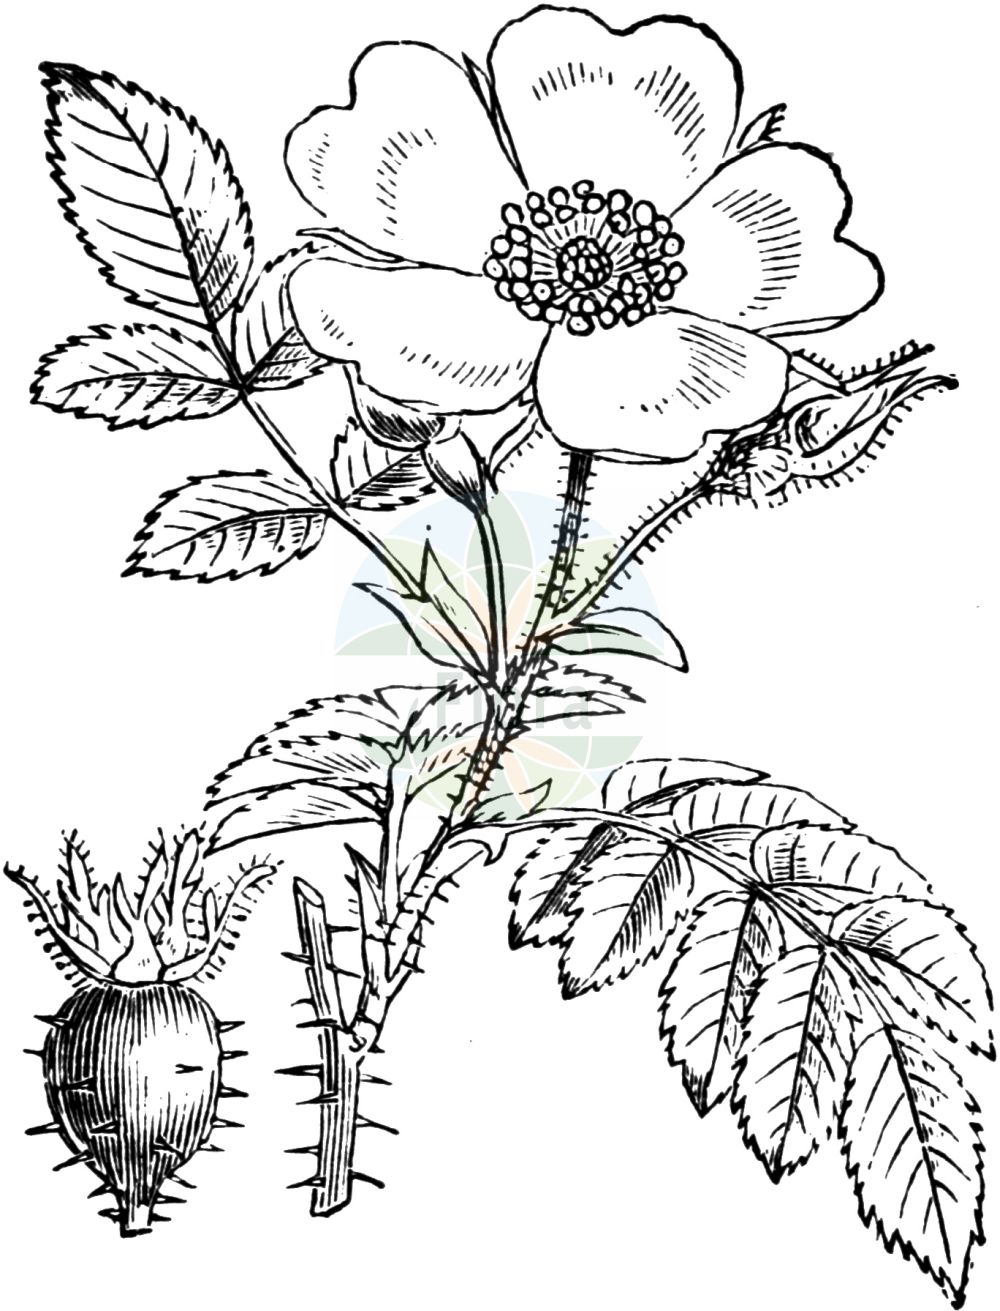 Historische Abbildung von Rosa villosa (Apfel-Rose - Apple Rose). Das Bild zeigt Blatt, Bluete, Frucht und Same. ---- Historical Drawing of Rosa villosa (Apfel-Rose - Apple Rose). The image is showing leaf, flower, fruit and seed.(Rosa villosa,Apfel-Rose,Apple Rose,Rosa alpicola,Rosa arduennensis,Rosa australis,Rosa borissovae,Rosa ciliatopetala,Rosa cognata,Rosa coziae,Rosa dicksonii,Rosa friburgensis,Rosa gaudinii,Rosa glutinosa,Rosa grenieri,Rosa ledebourii,Rosa minuta,Rosa osmodendron,Rosa pomifera,Rosa recondita,Rosa resinosa,Rosa sancti-andreae,Rosa villosa,Apfel-Rose,Apple Rose,Virginia Rose,Rosa,Rose,Rose,Rosaceae,Rosengewächse,Rose family,Blatt,Bluete,Frucht,Same,leaf,flower,fruit,seed,Fitch et al. (1880))